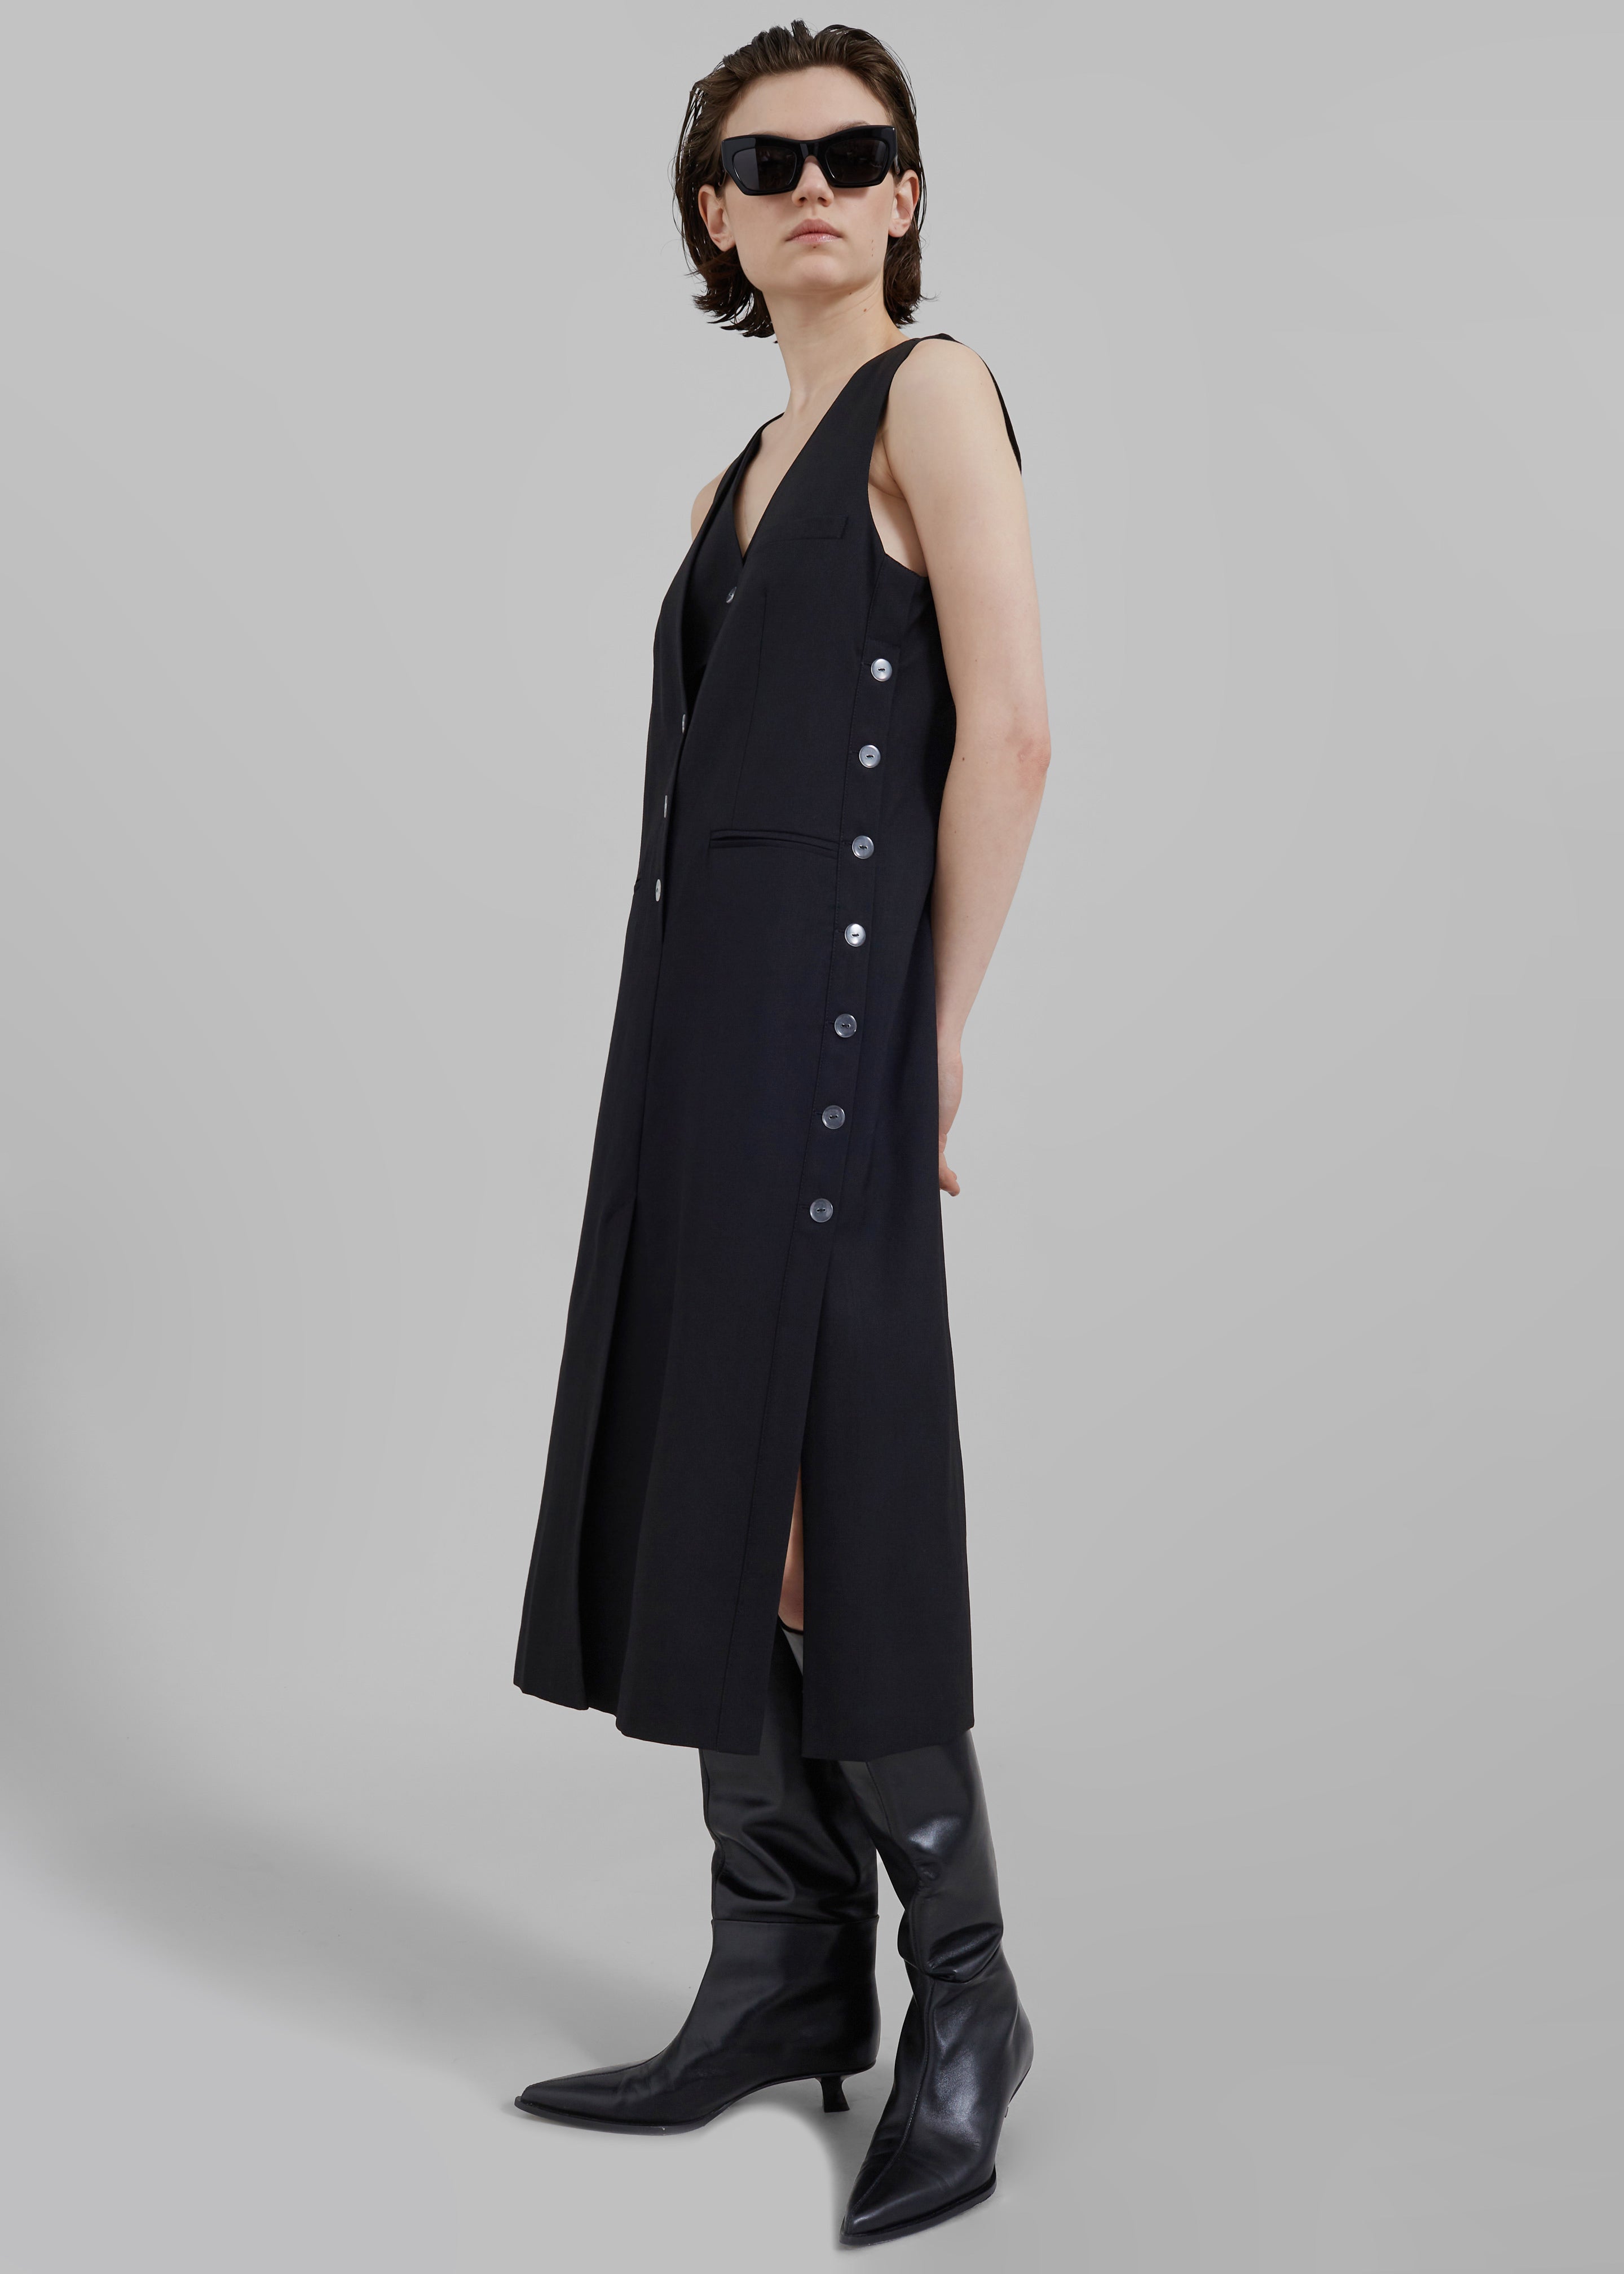 3.1 Phillip Lim Tailored Vest Dress with Set-In Bra - Black - 2